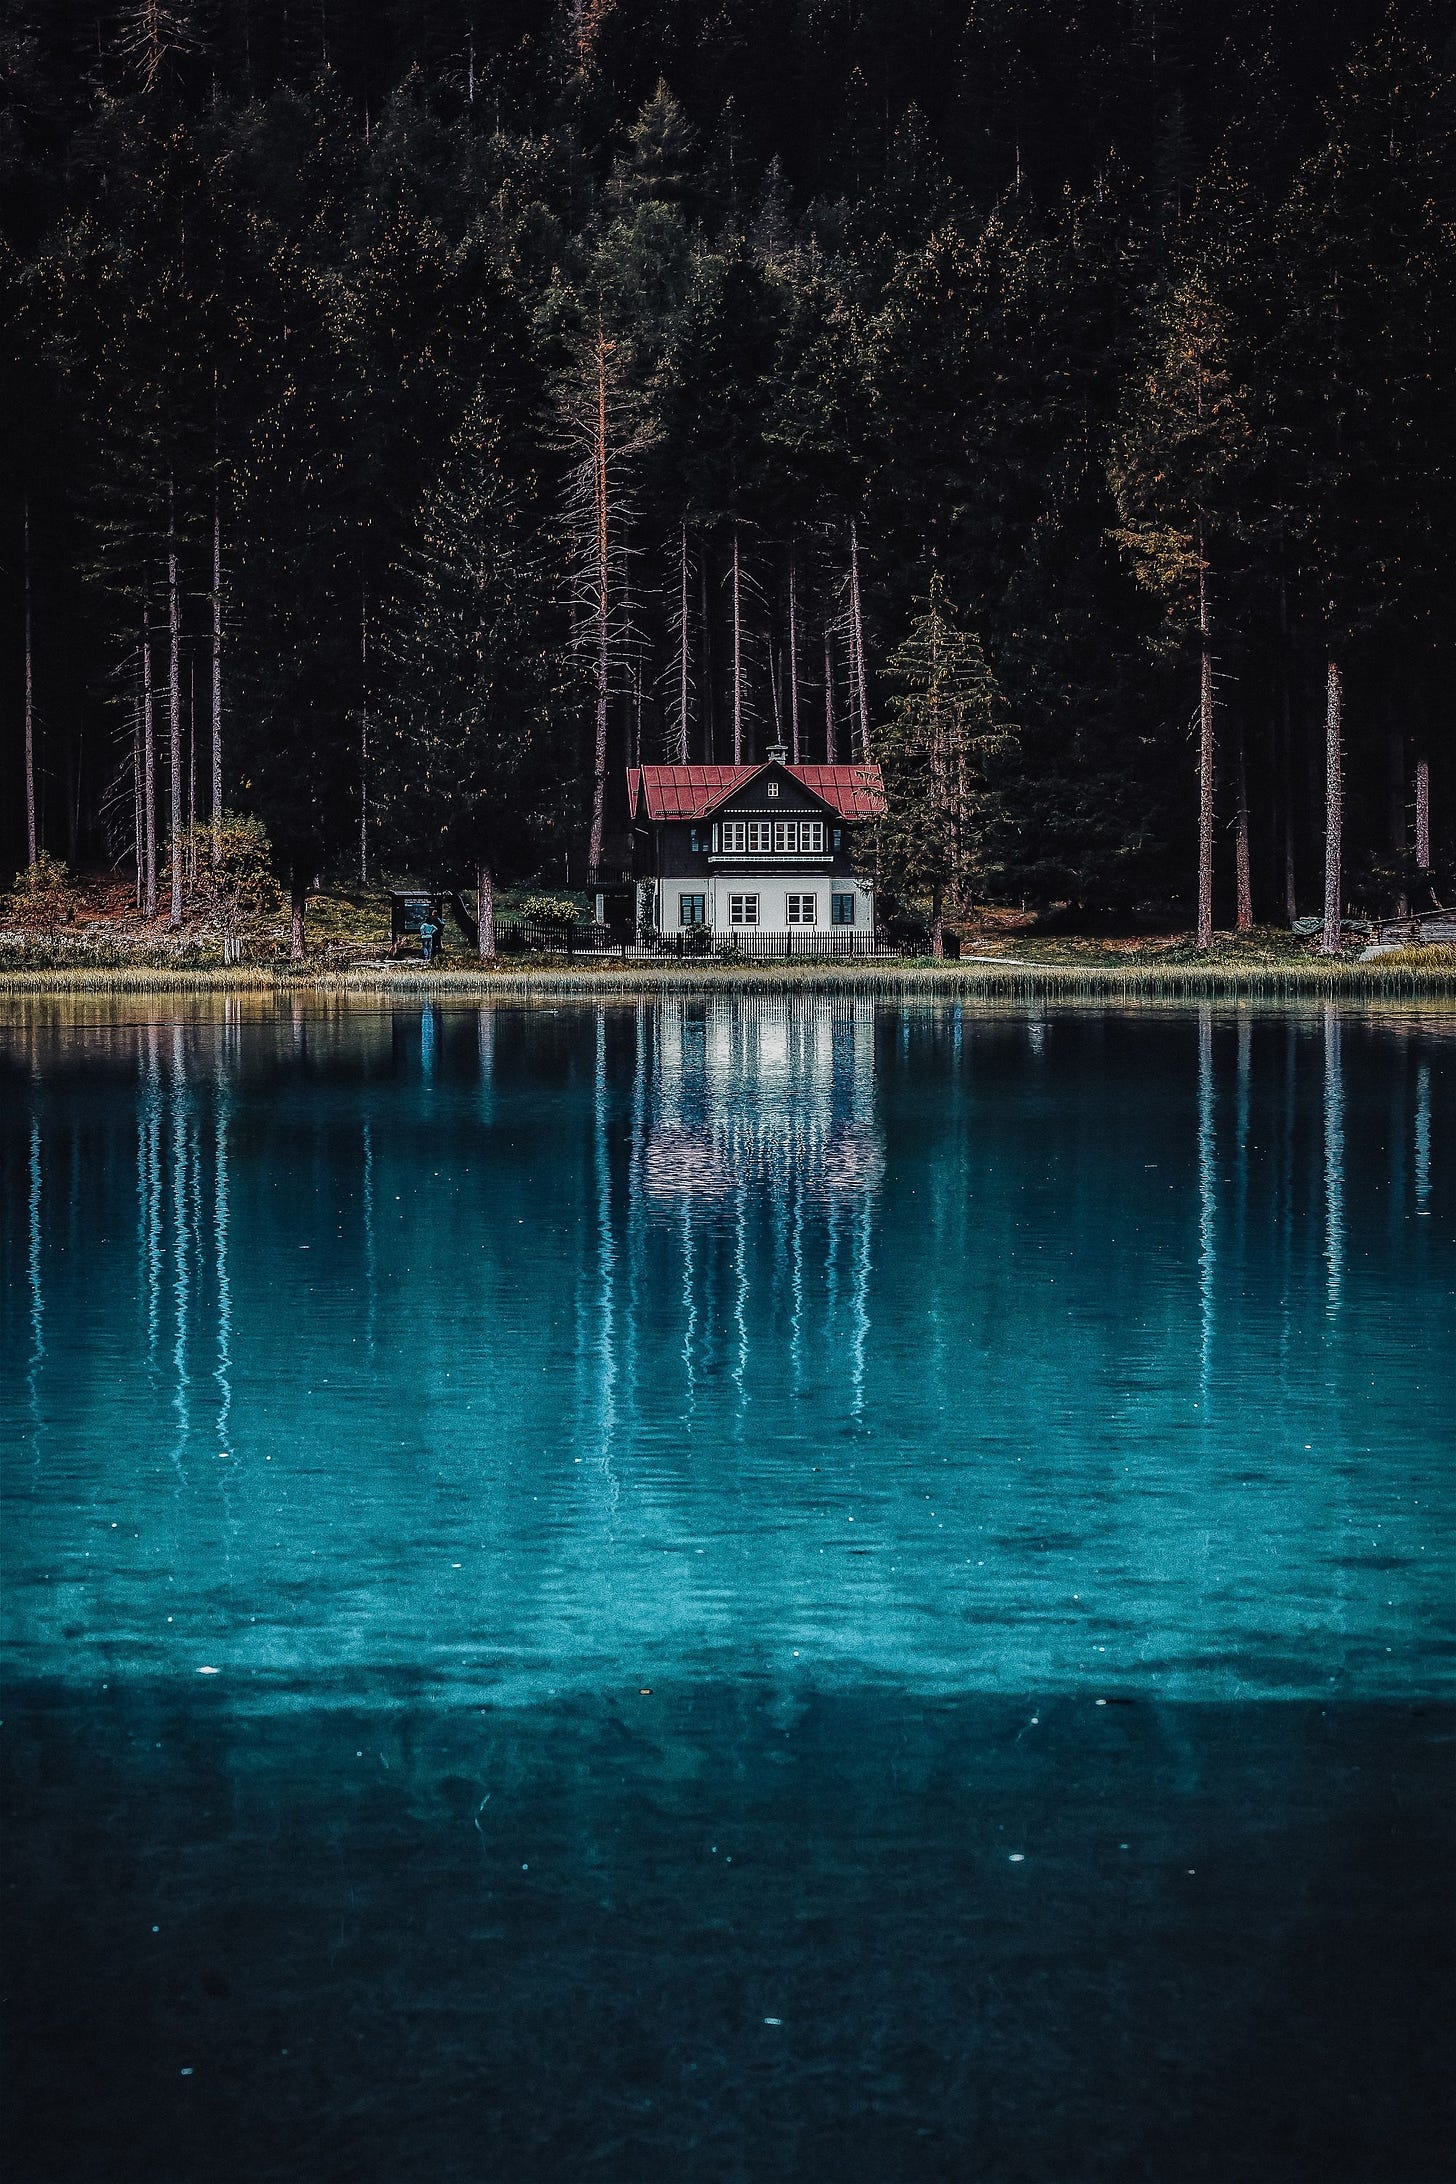 Photo of lake house by eberhard grossgasteiger from Pexels